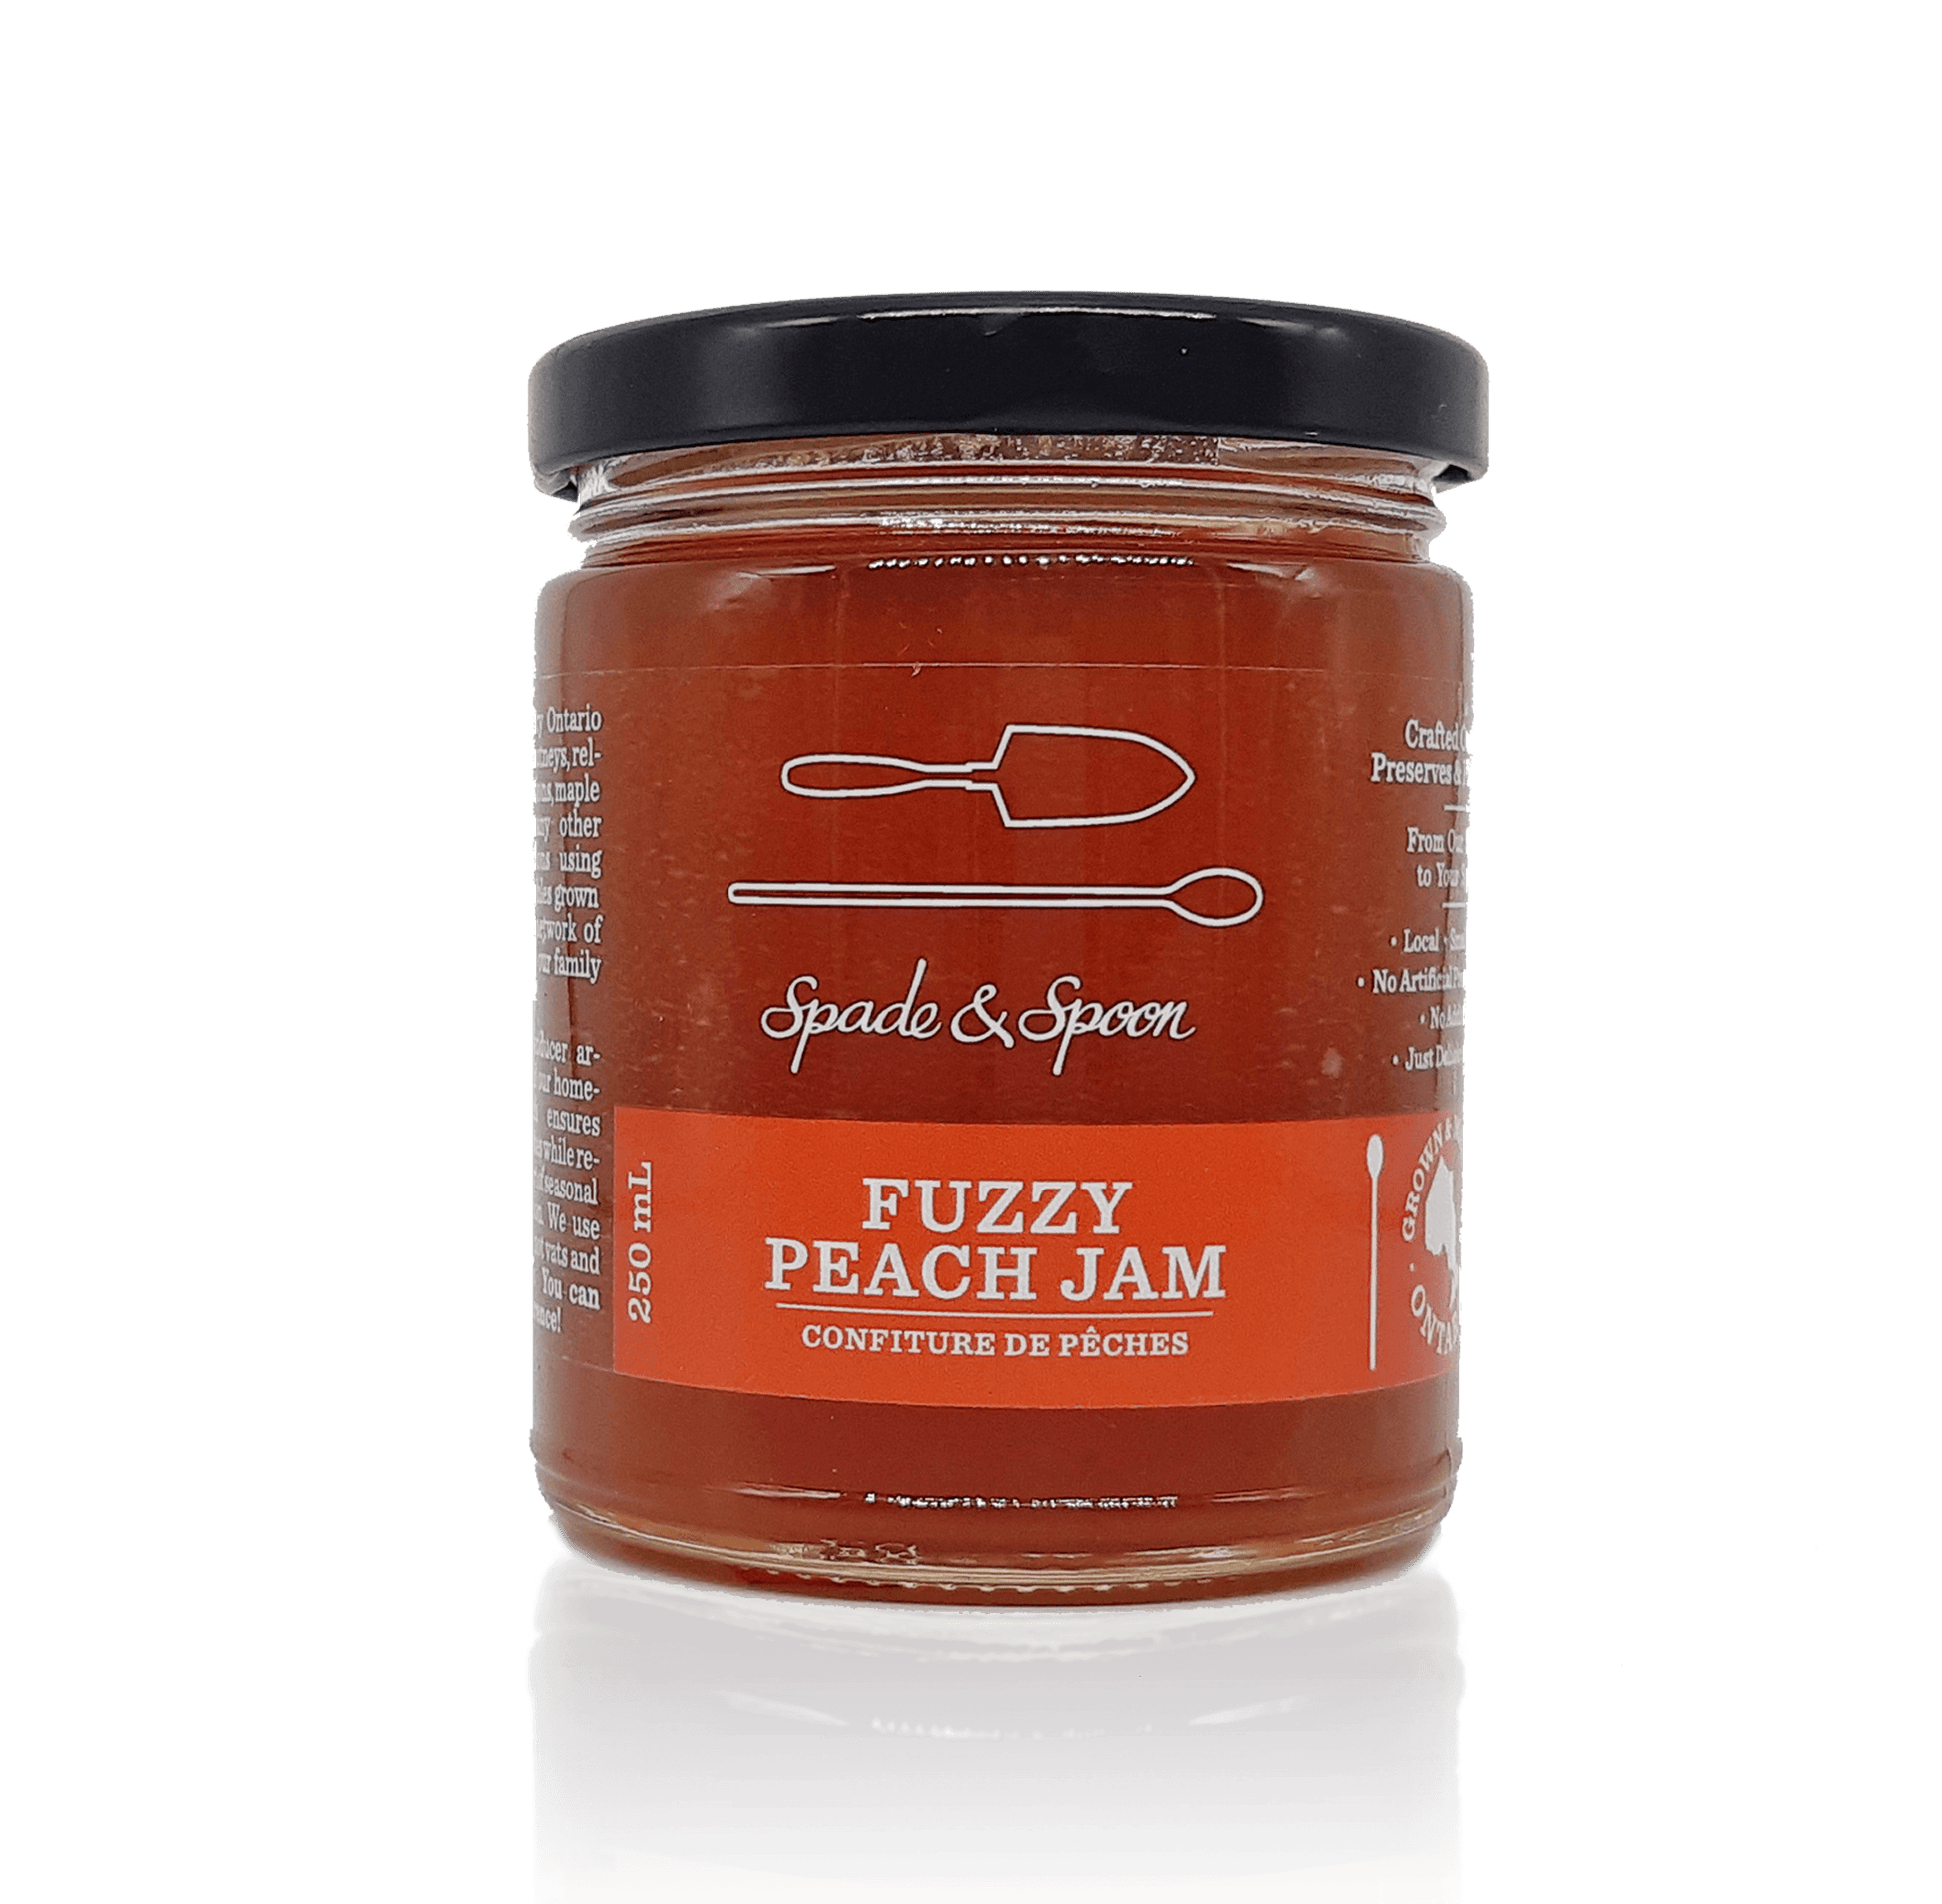 Fuzzy Peach Jam - Spade & Spoon - Ontario Farm Goods